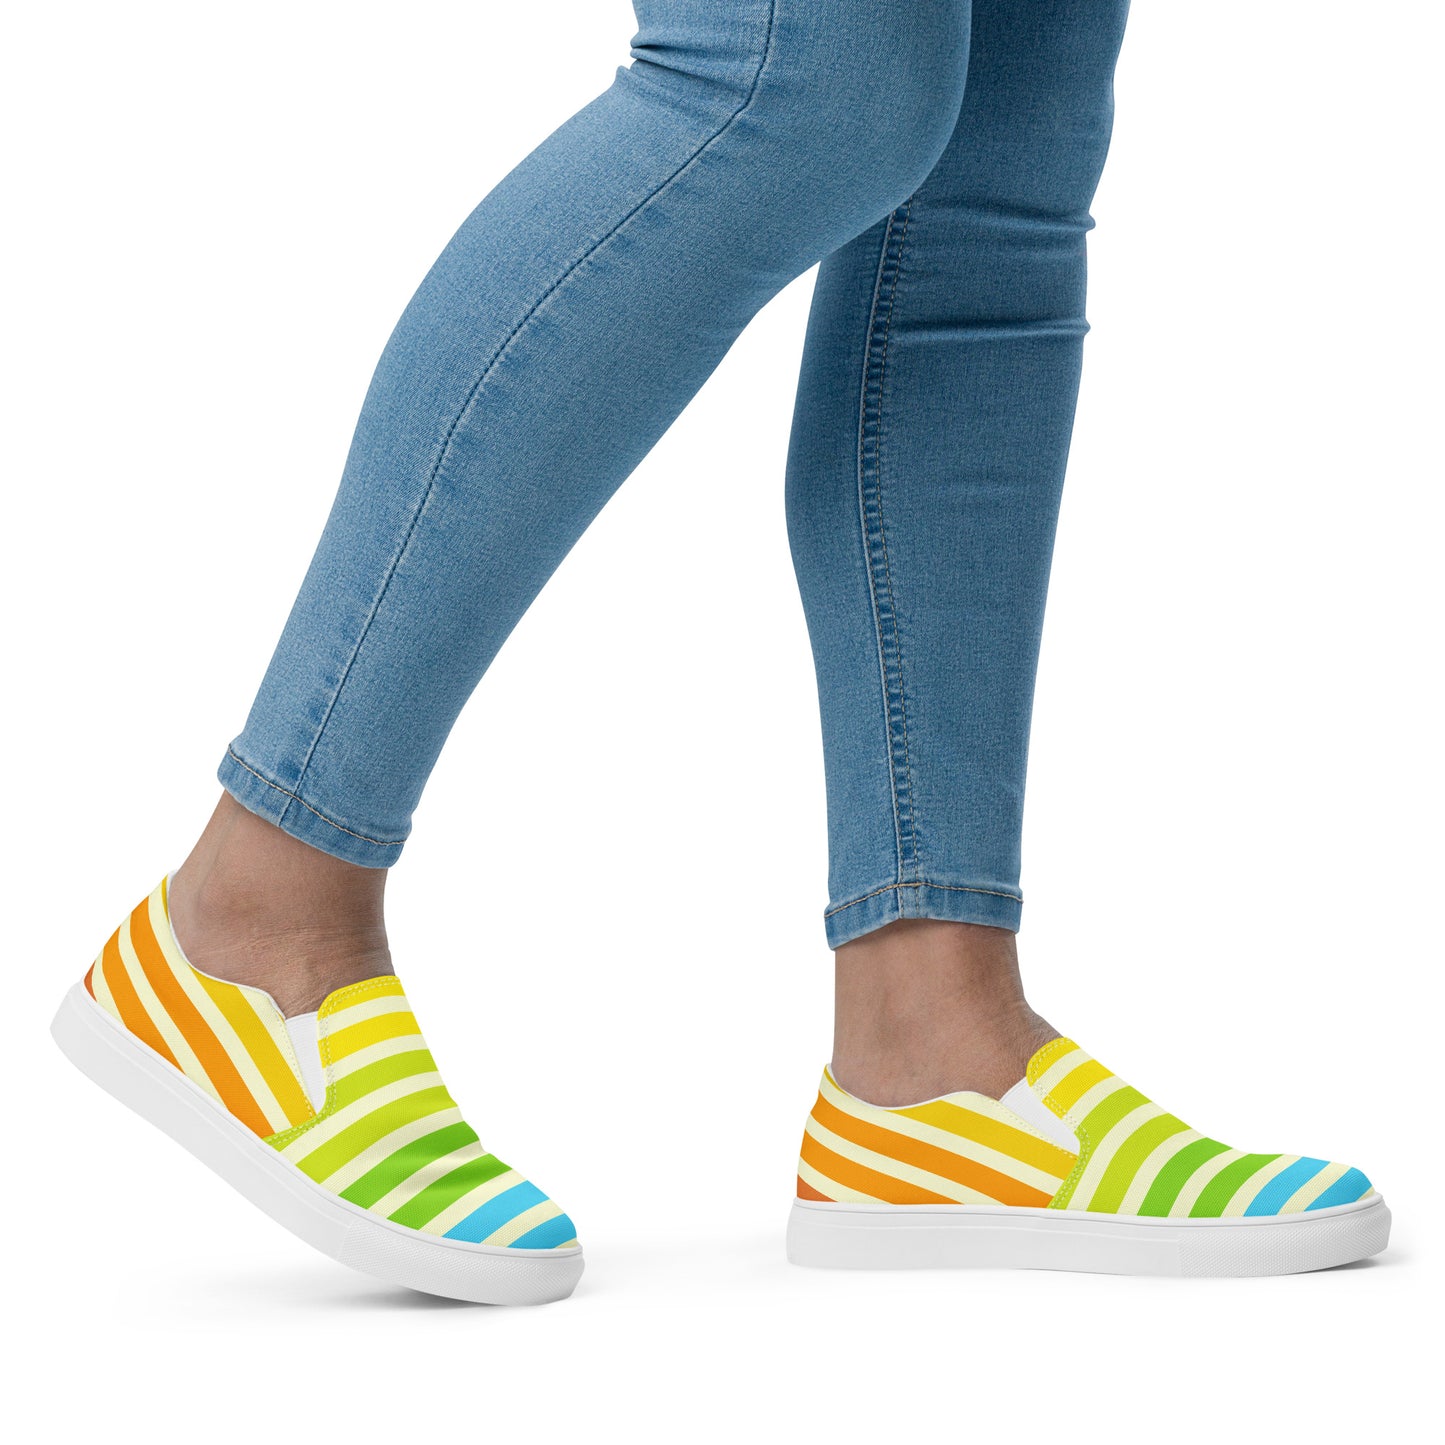 Tropic Stripes Women’s slip-on canvas shoes